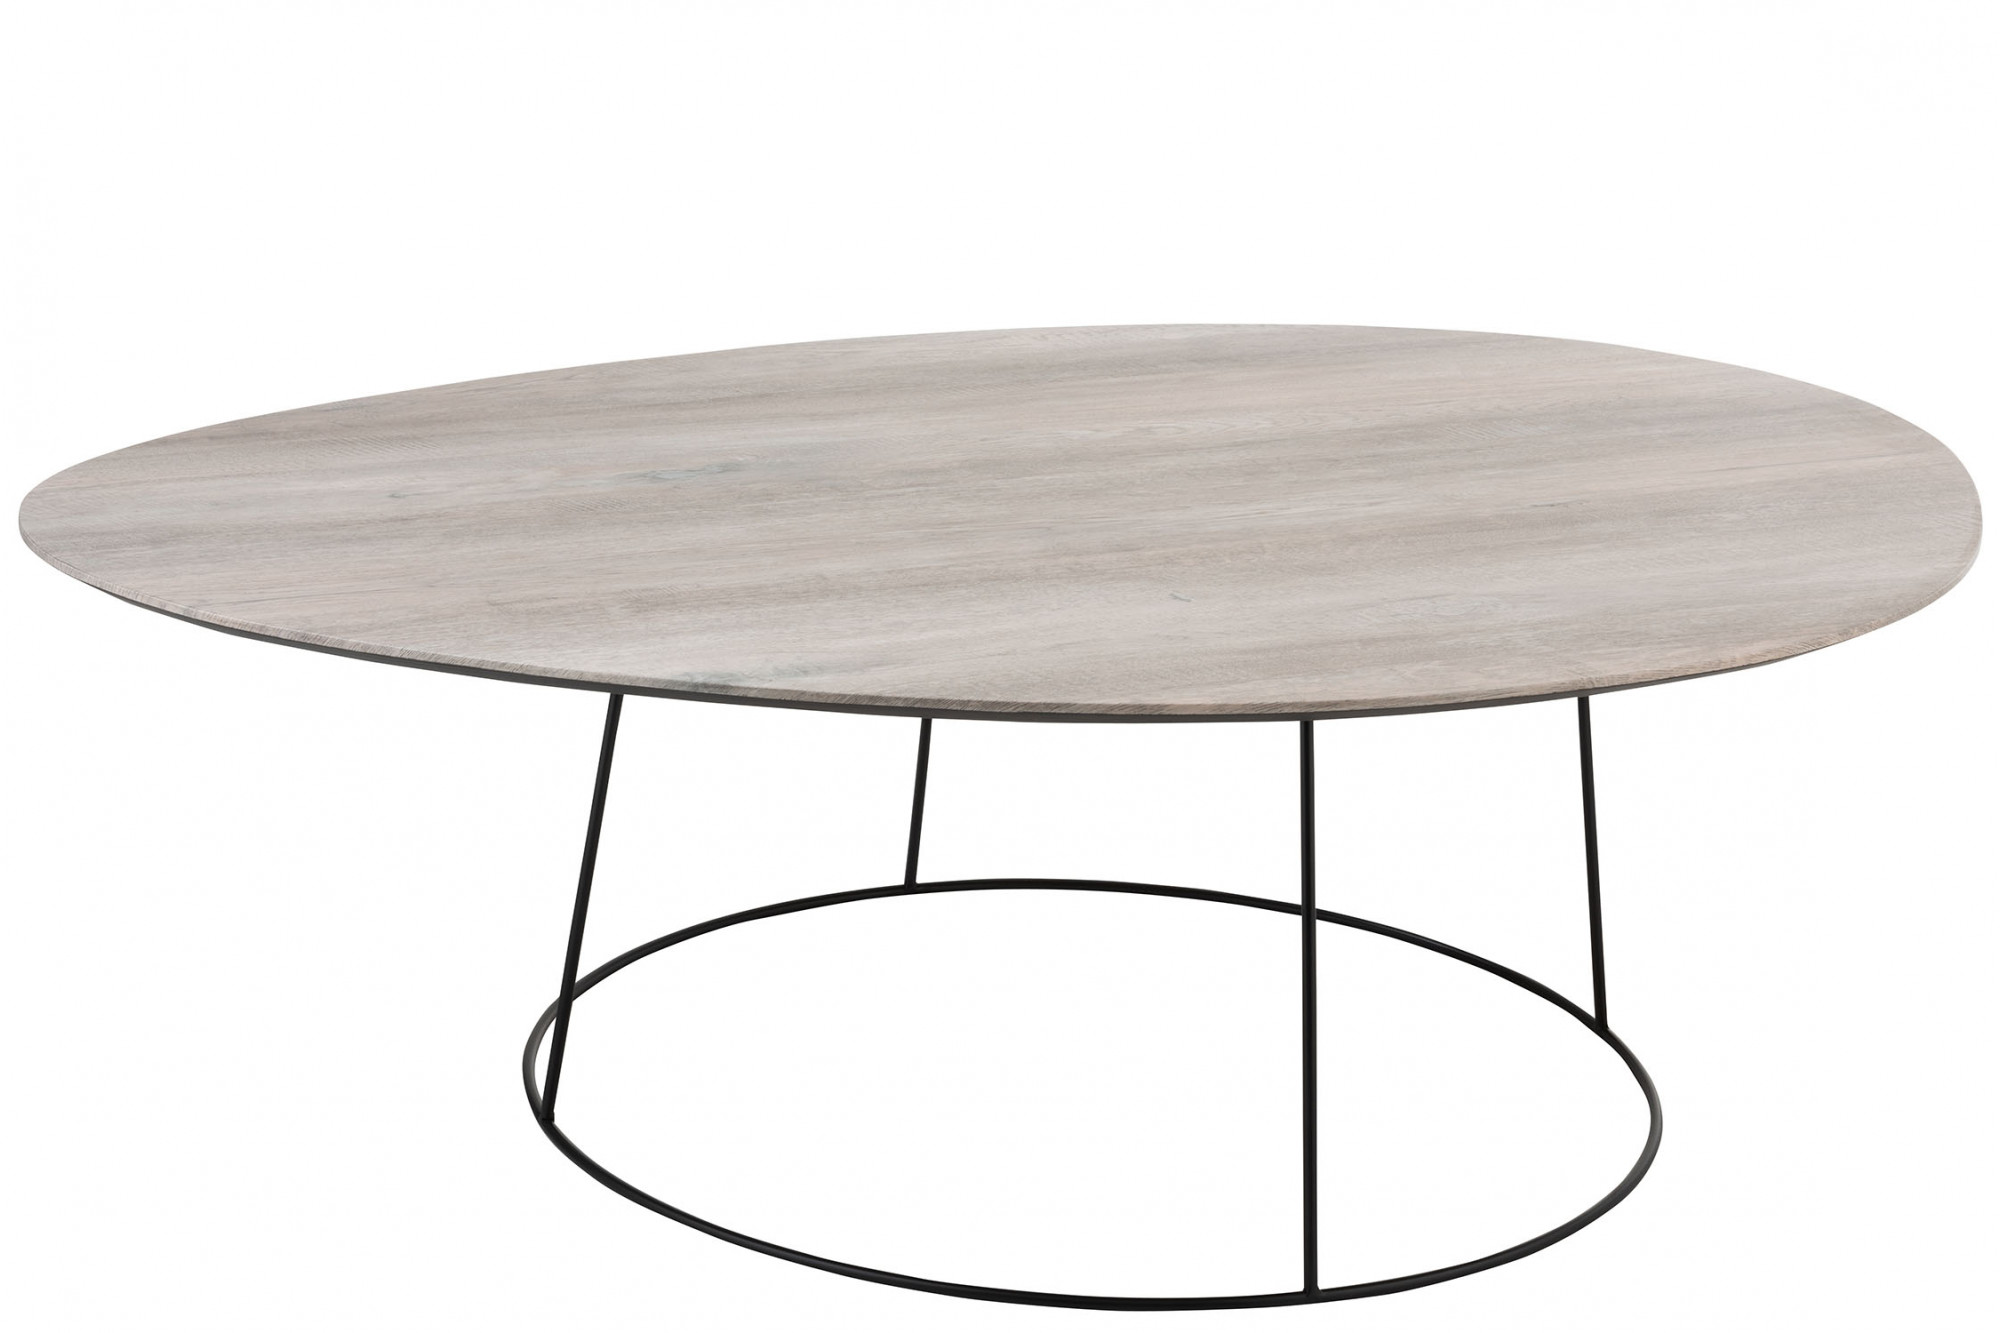 Grande table basse ovale en bois et métal